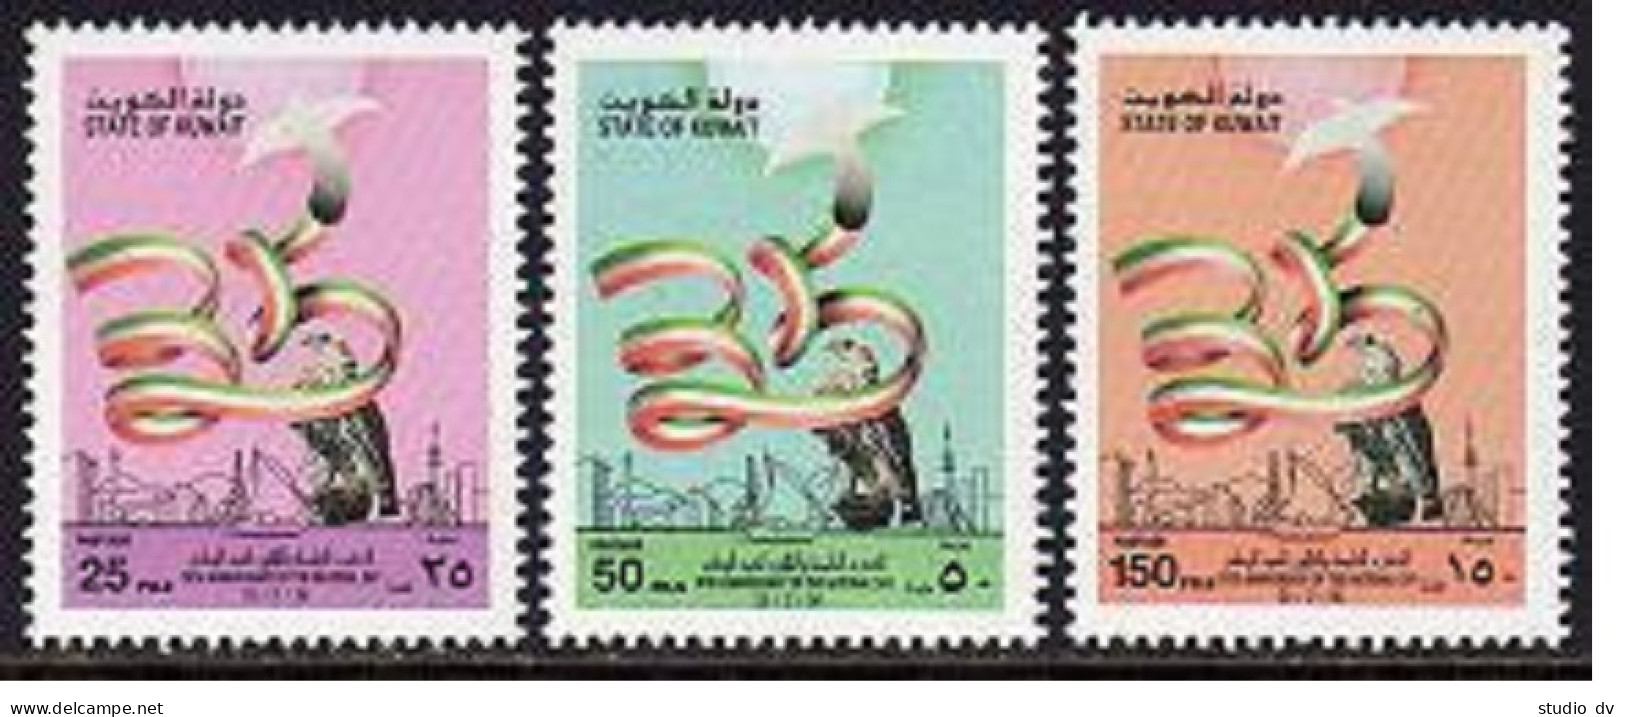 Kuwait 1303-1305, MNH. Michel 1444-1446. 35th National Day, 1996. Birds. - Kuwait